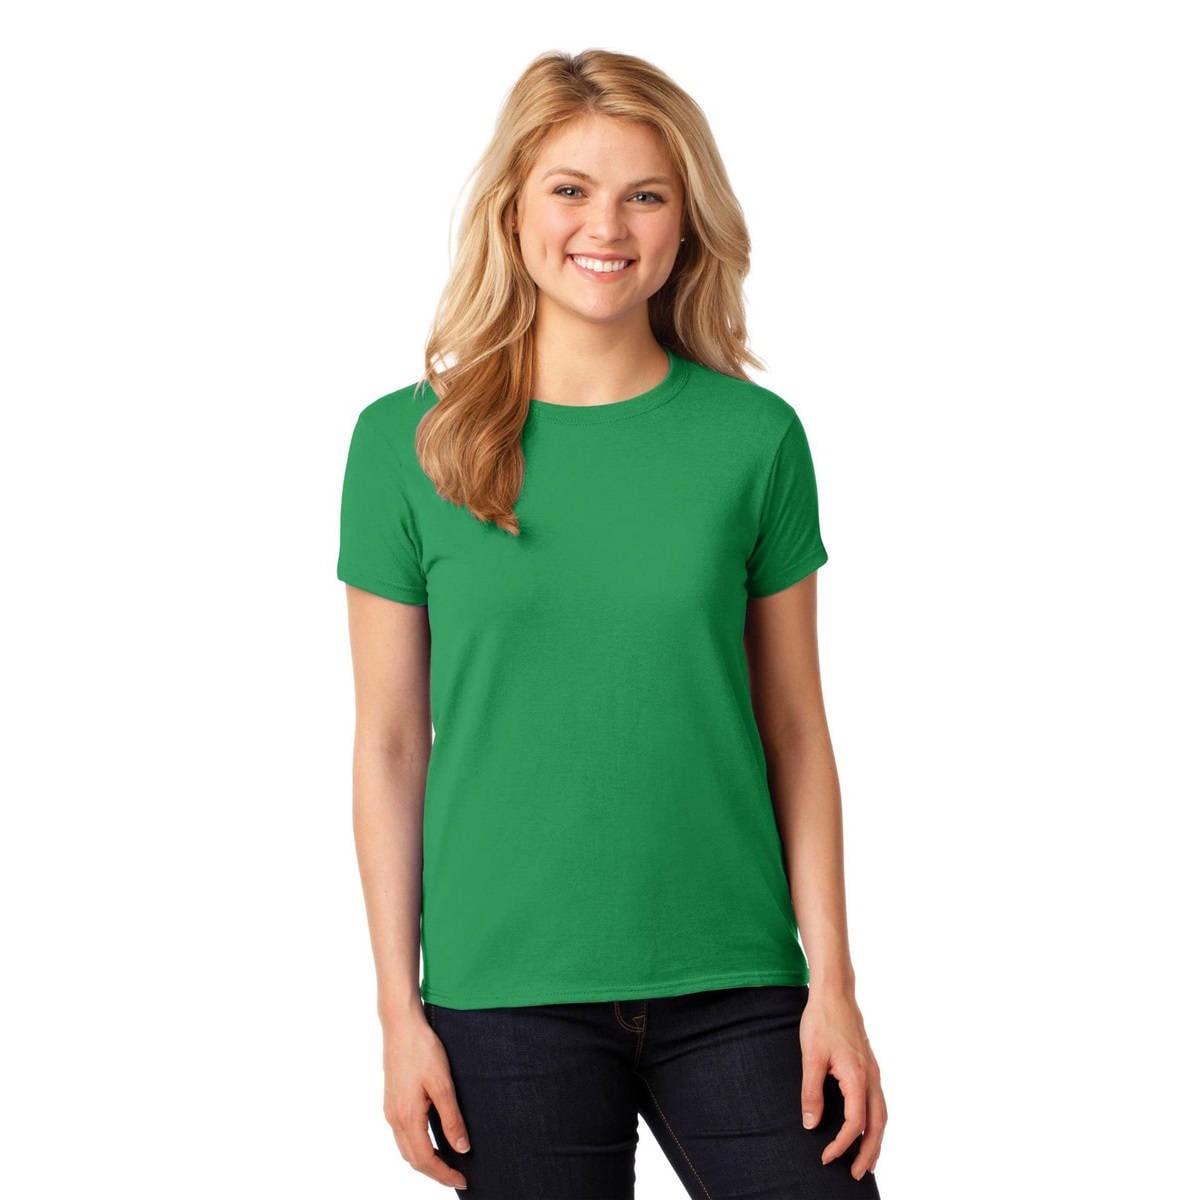 Women's St. Patricks Day Shirt, Go Luck Yourself, Irish Shirt, Shamrock, Green Shirt, Irish Tee, Funny